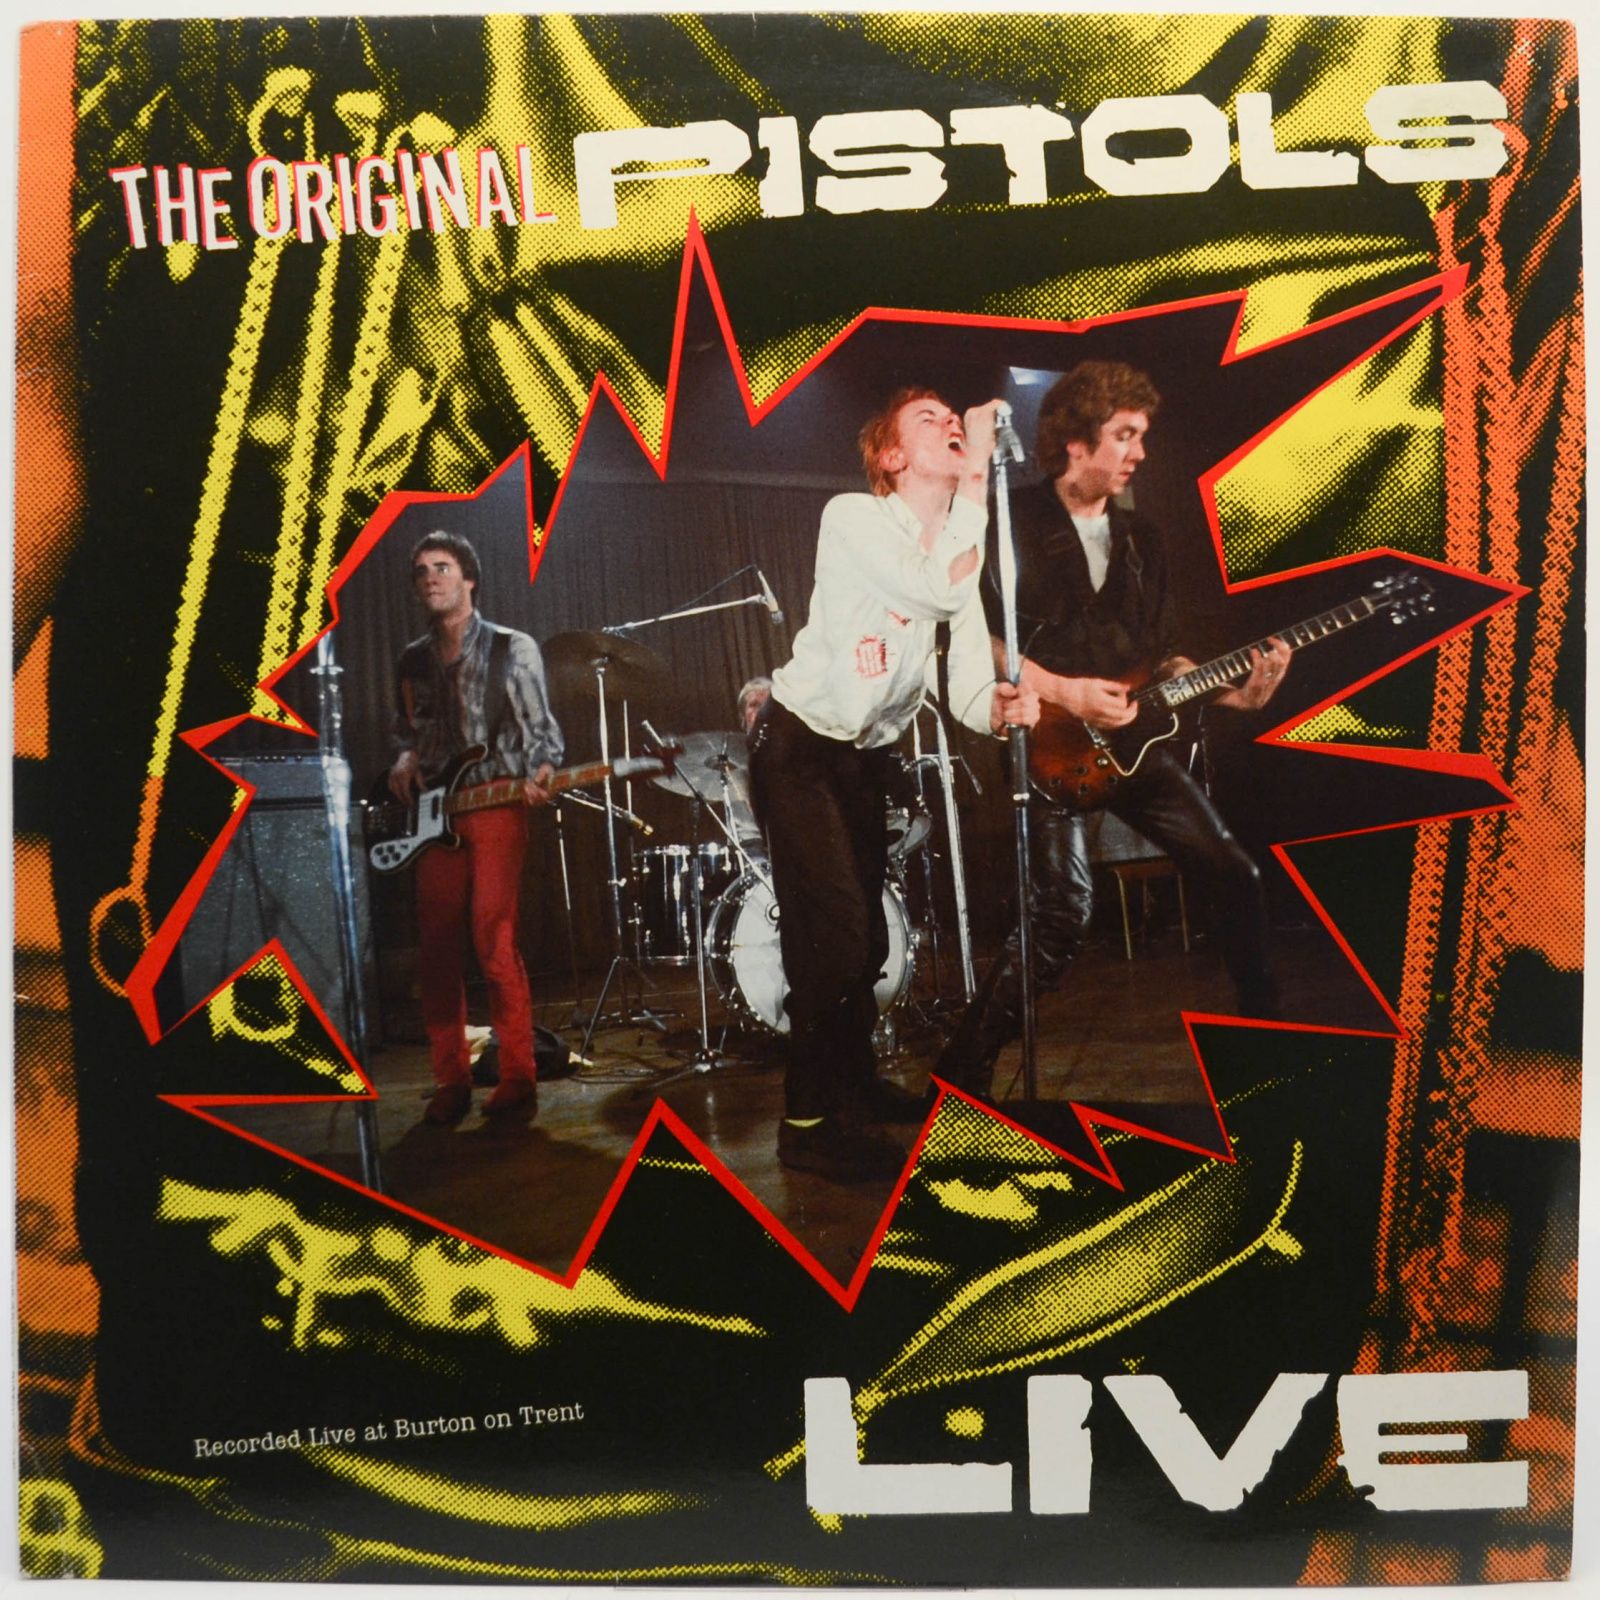 Original Pistols — Live, 1985